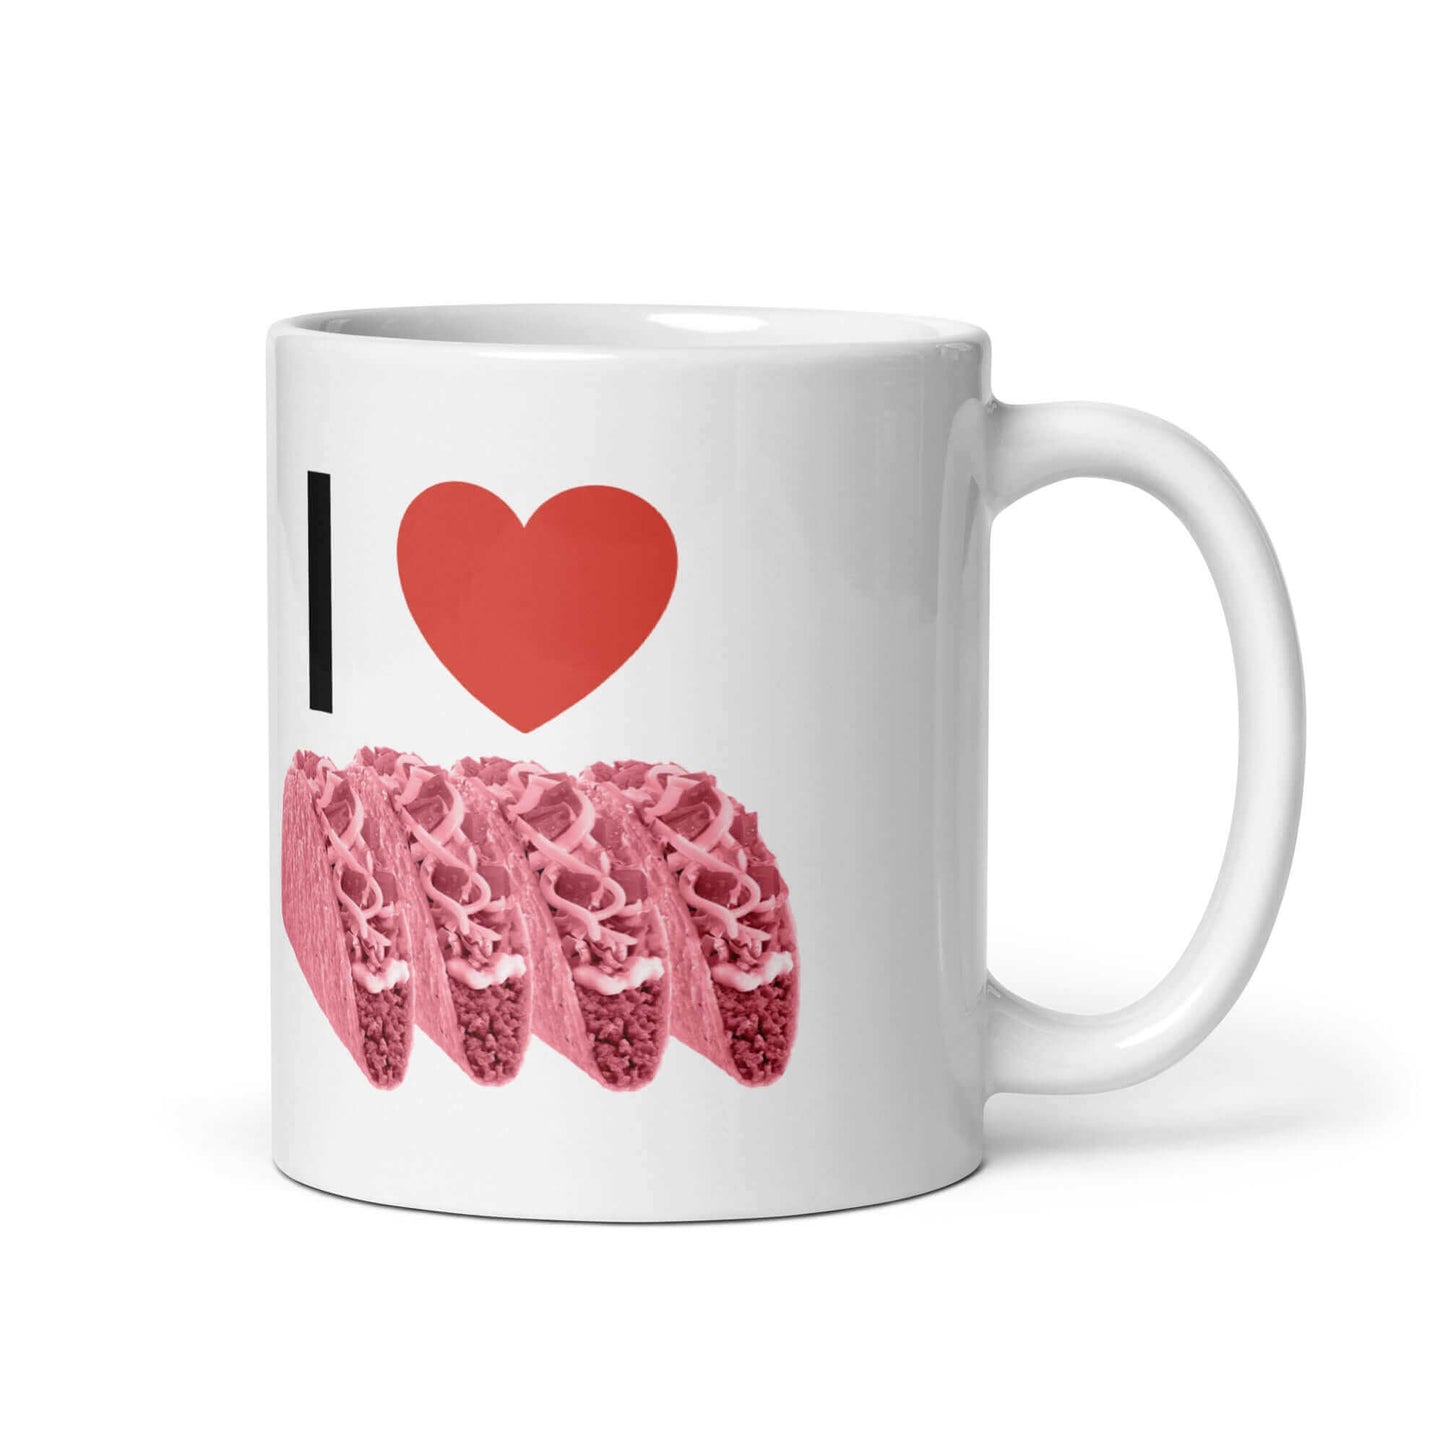 I LOVE pink tacos - White glossy mug - Horrible Designs